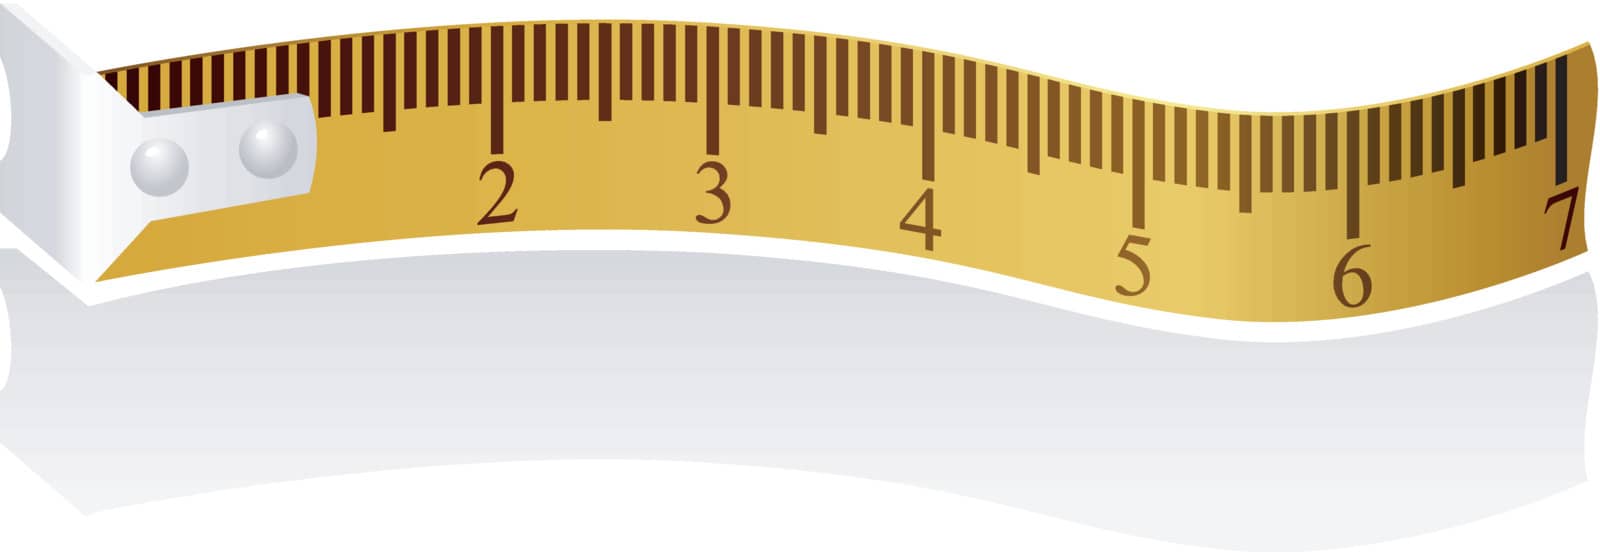 Vector illustration of a measuring tape by Larser